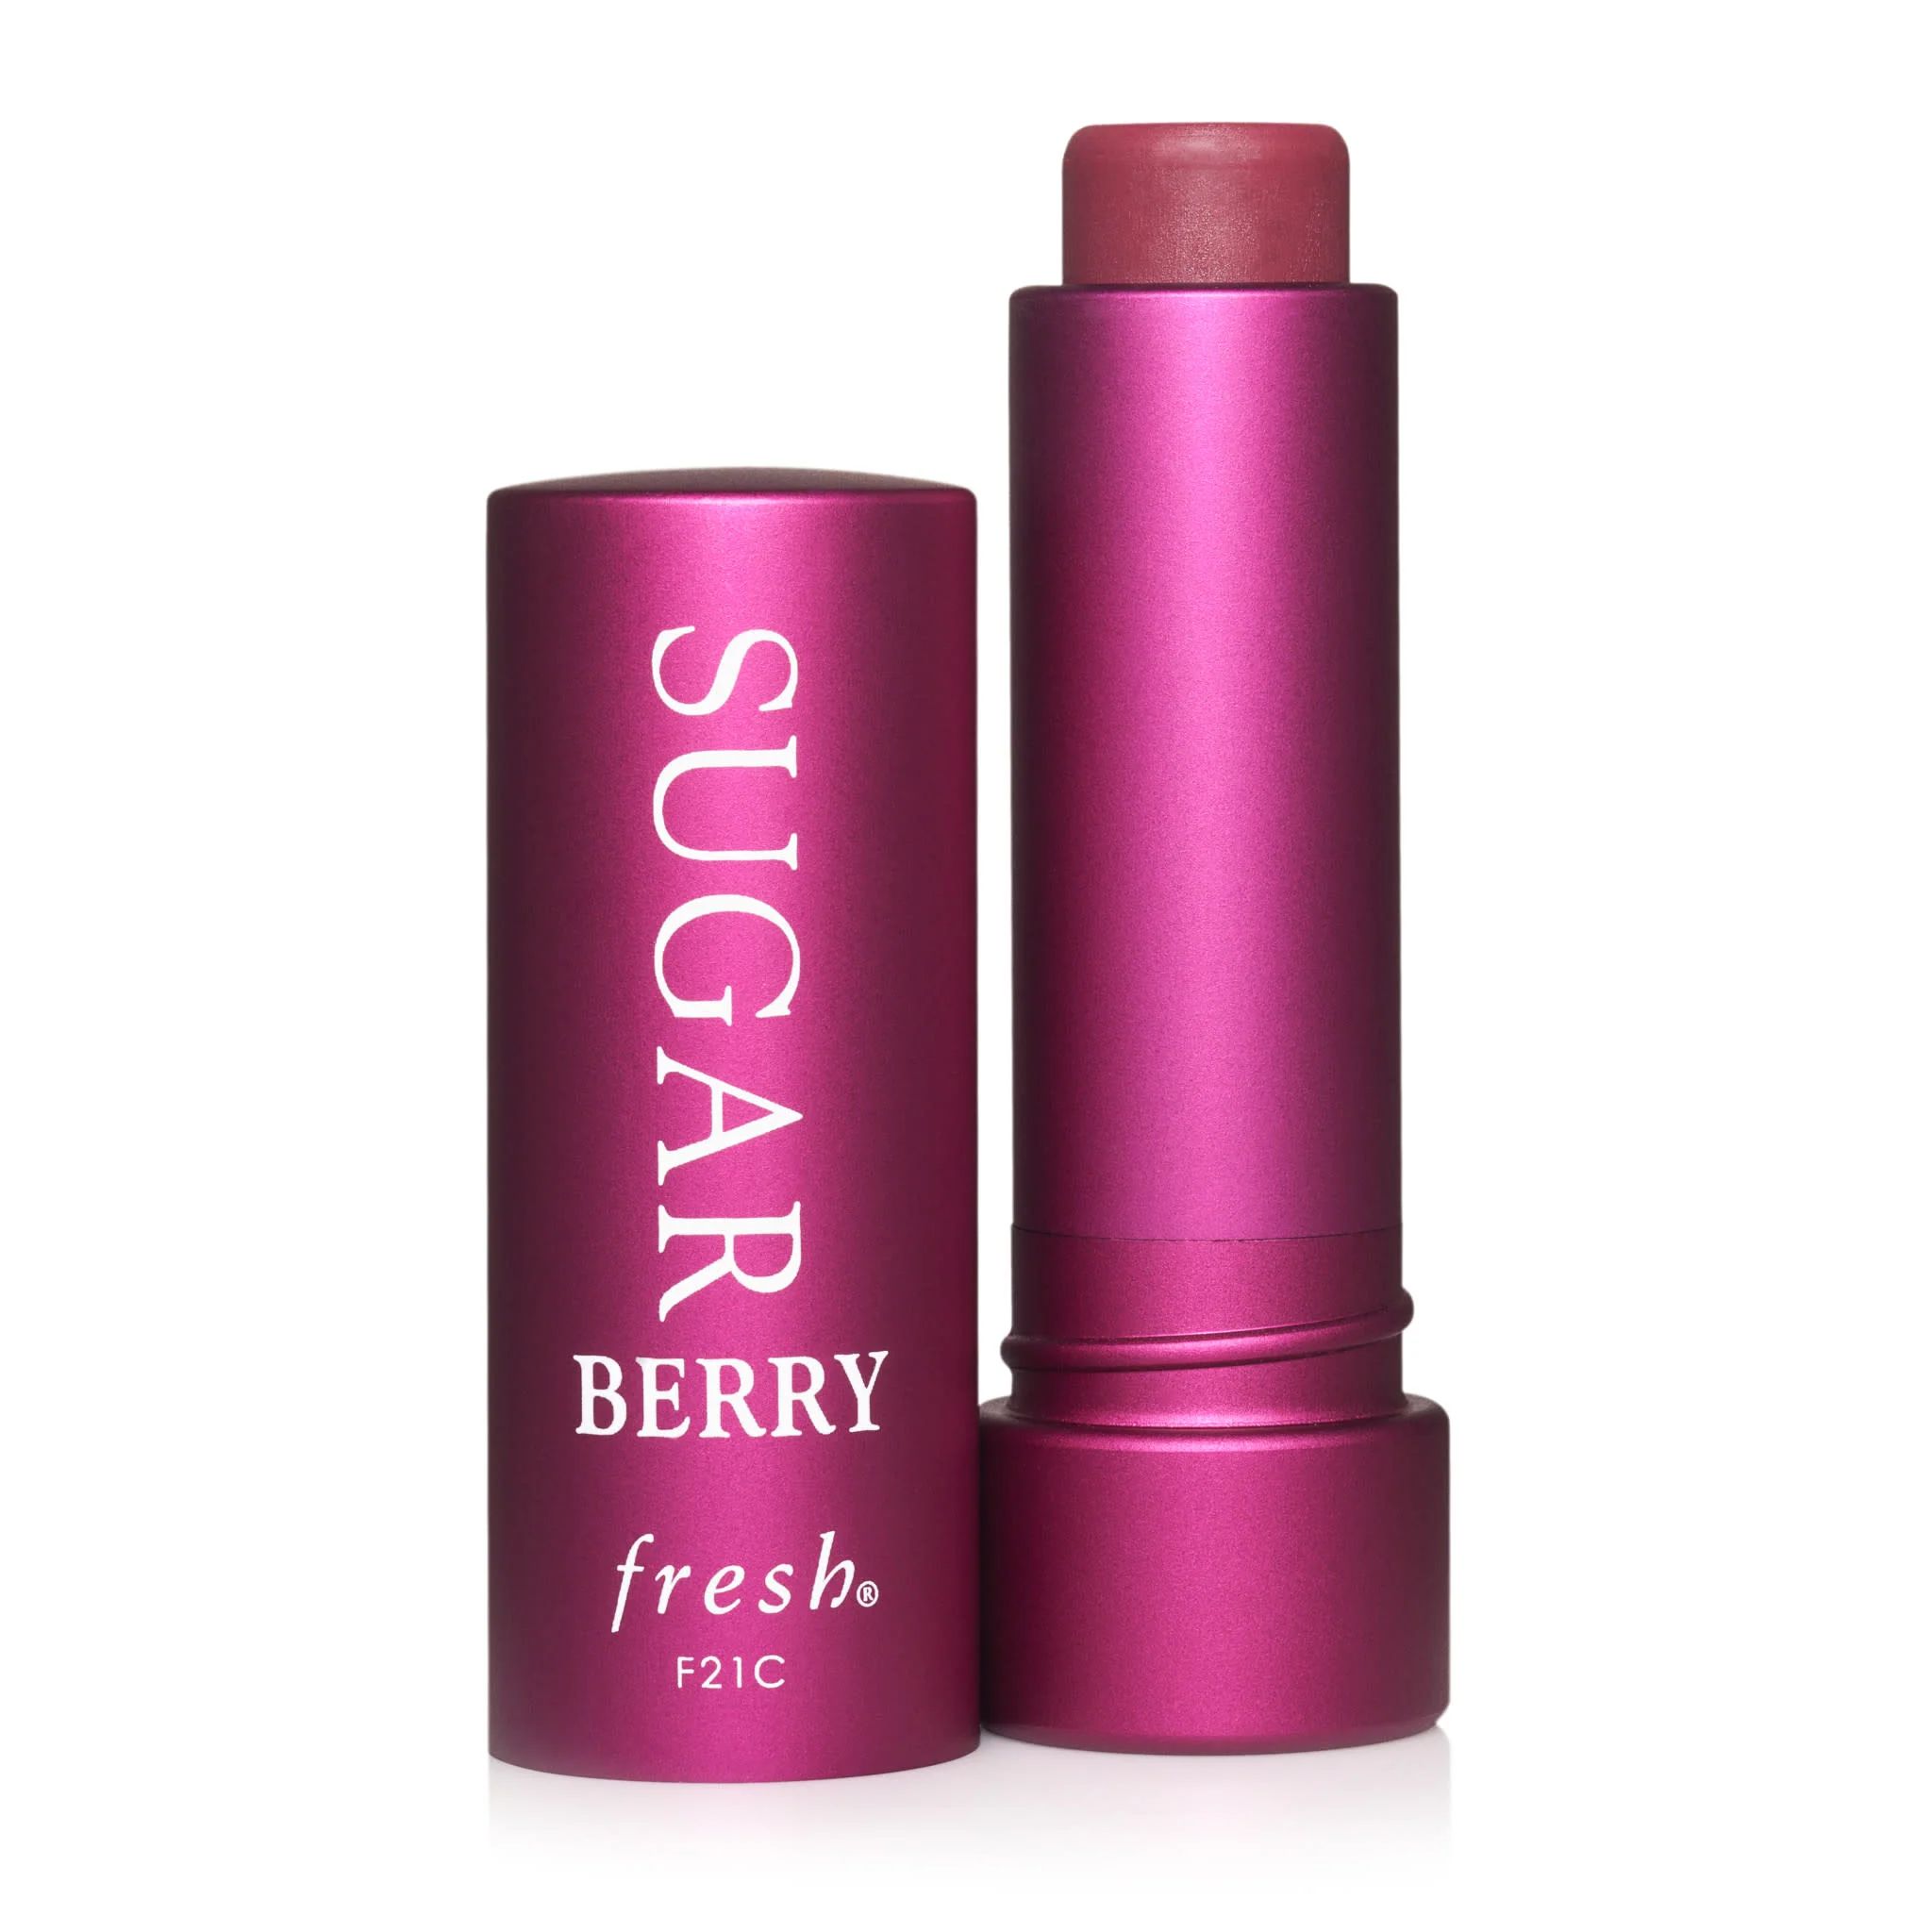 Sugar Berry Tinted Lip Treatment Sunscreen SPF 15 | Bluemercury, Inc.